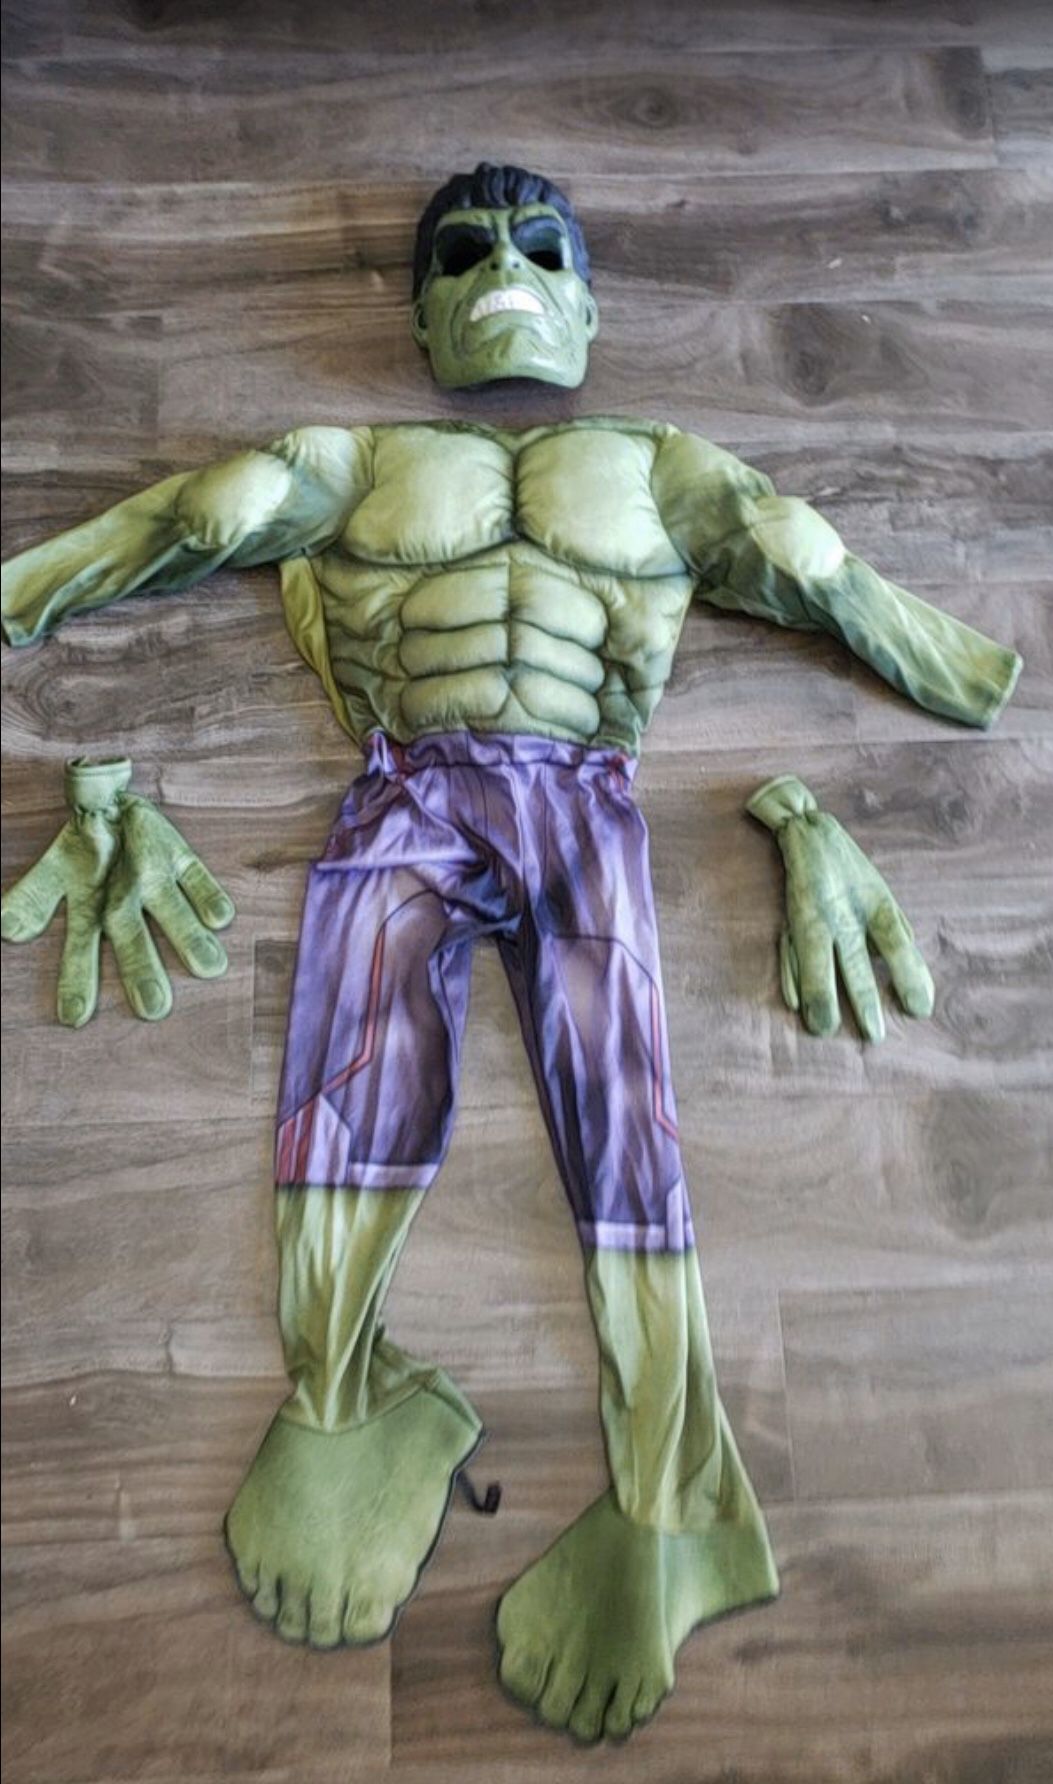 Hulk costume size 6/7 boy